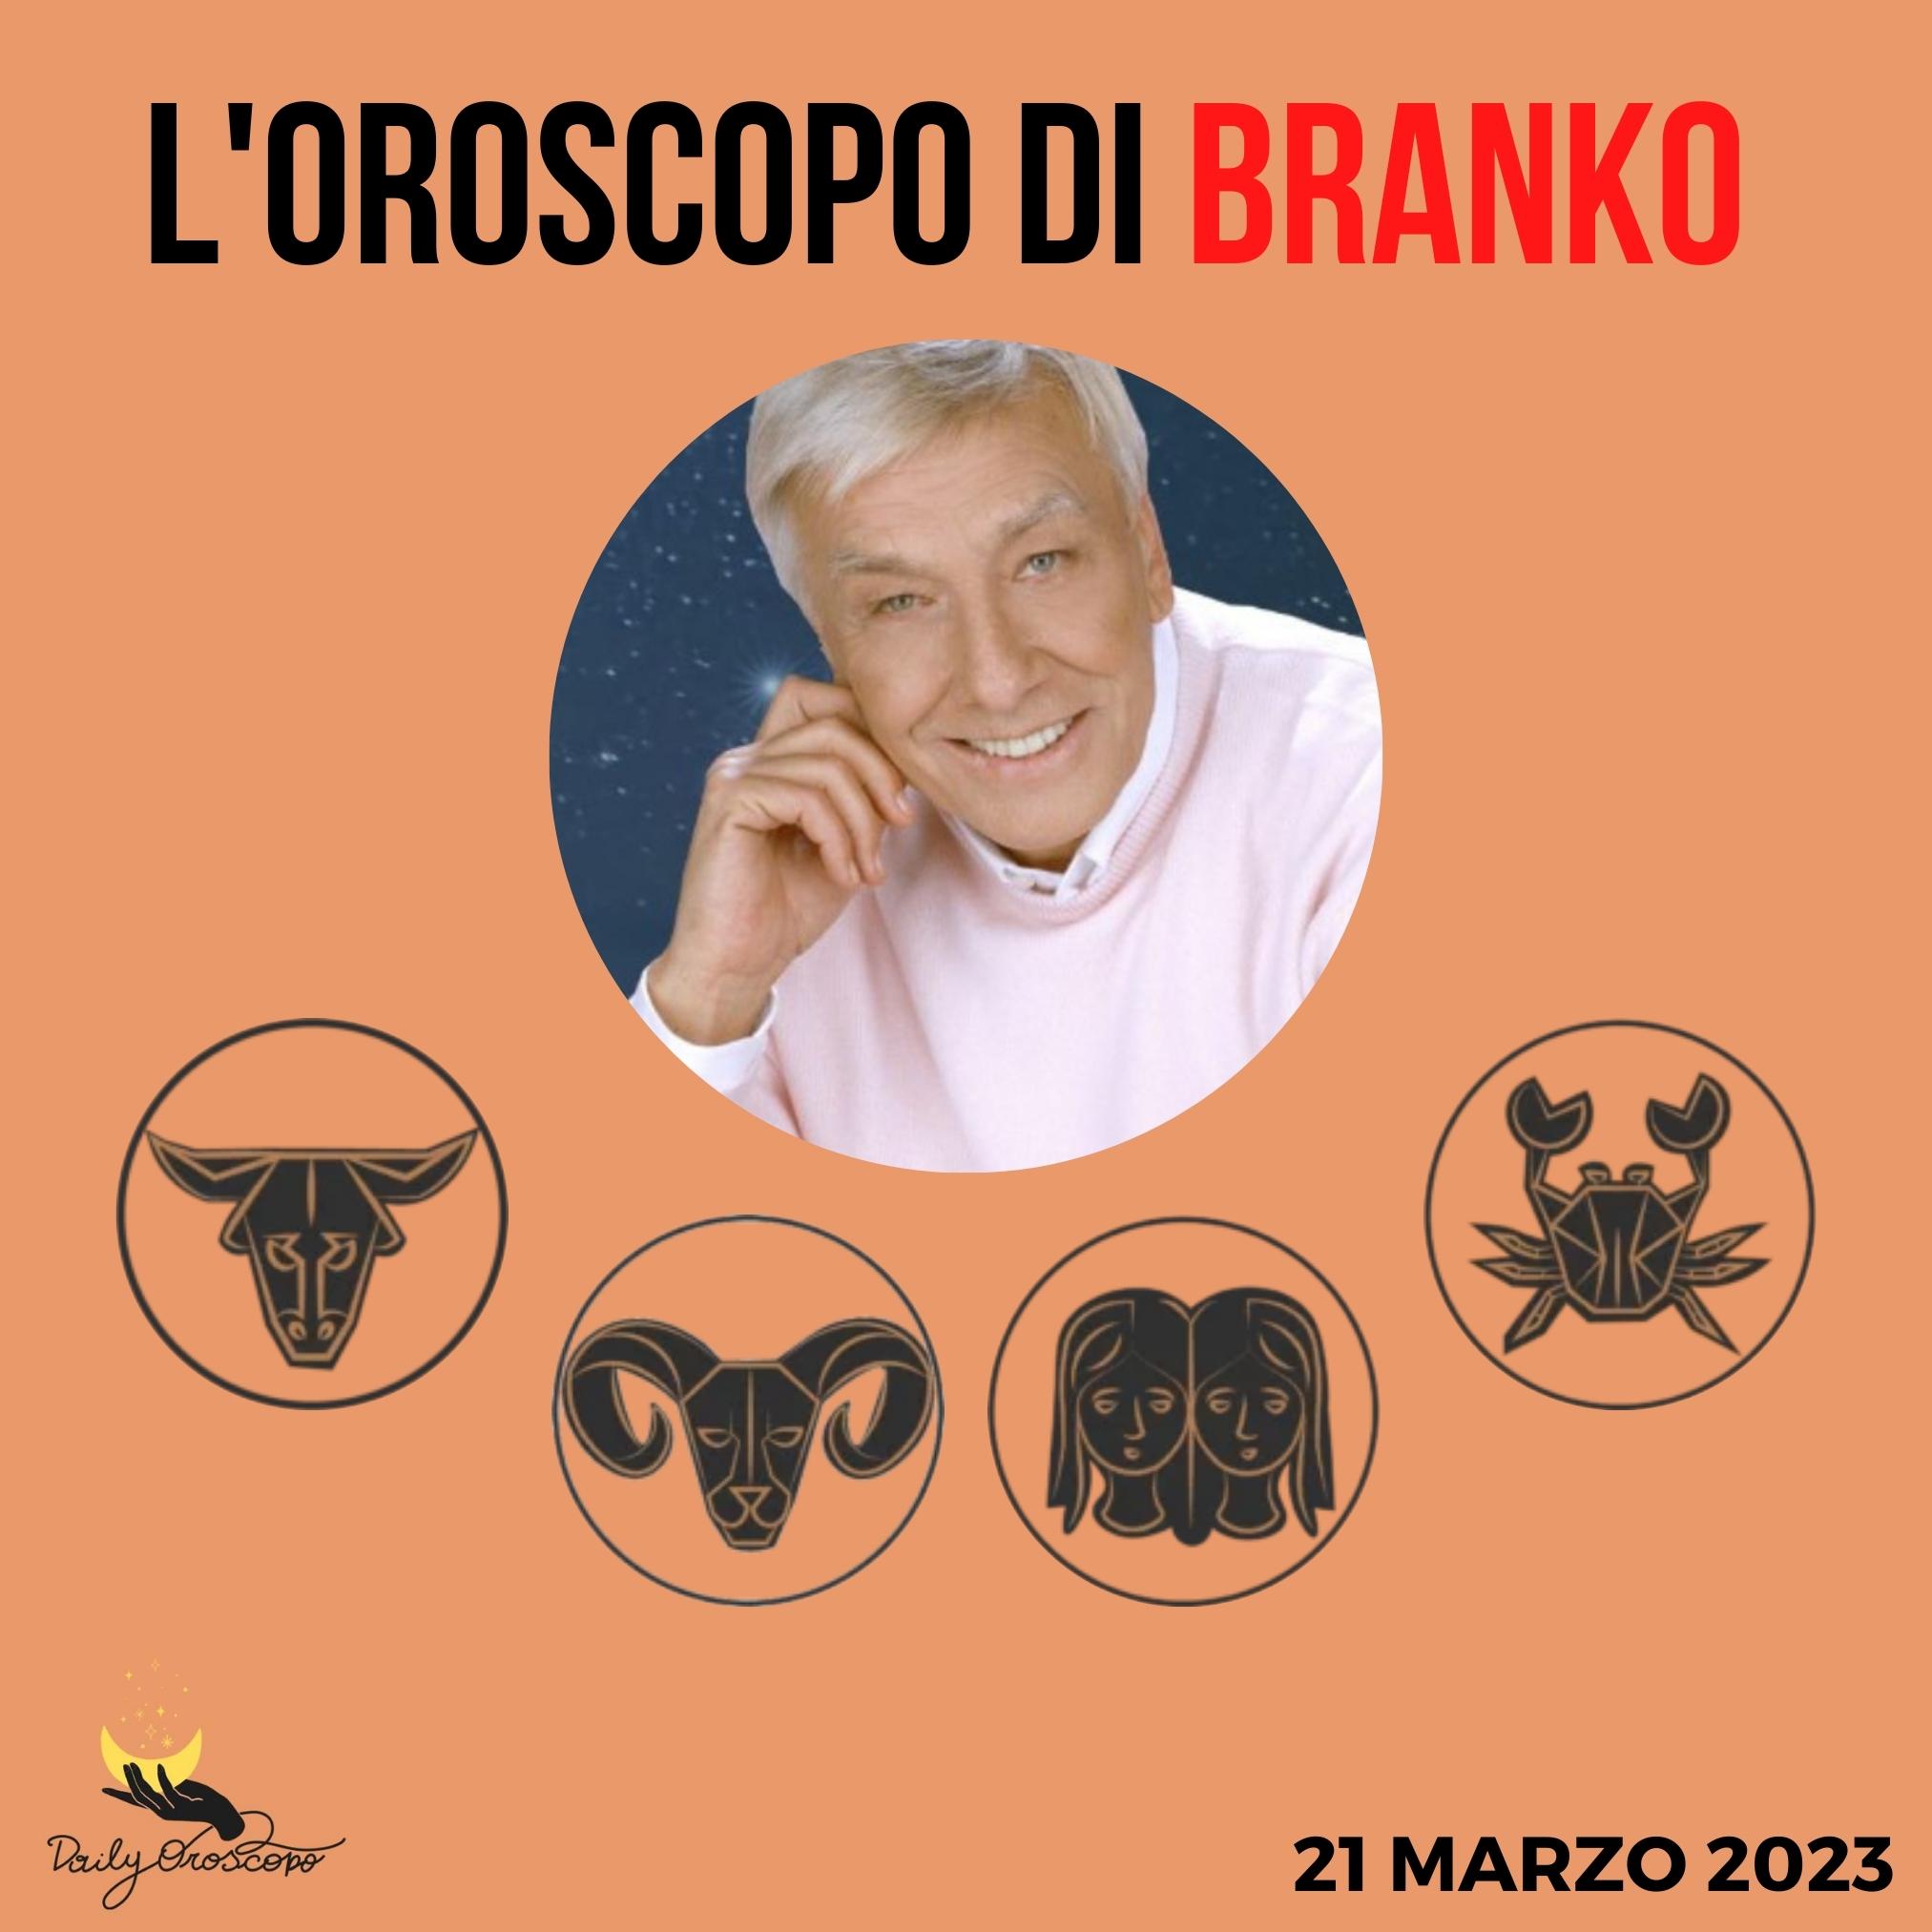 Oroscopo Branko oggi 21 marzo 2023 Toro Ariete Gemelli Cancro